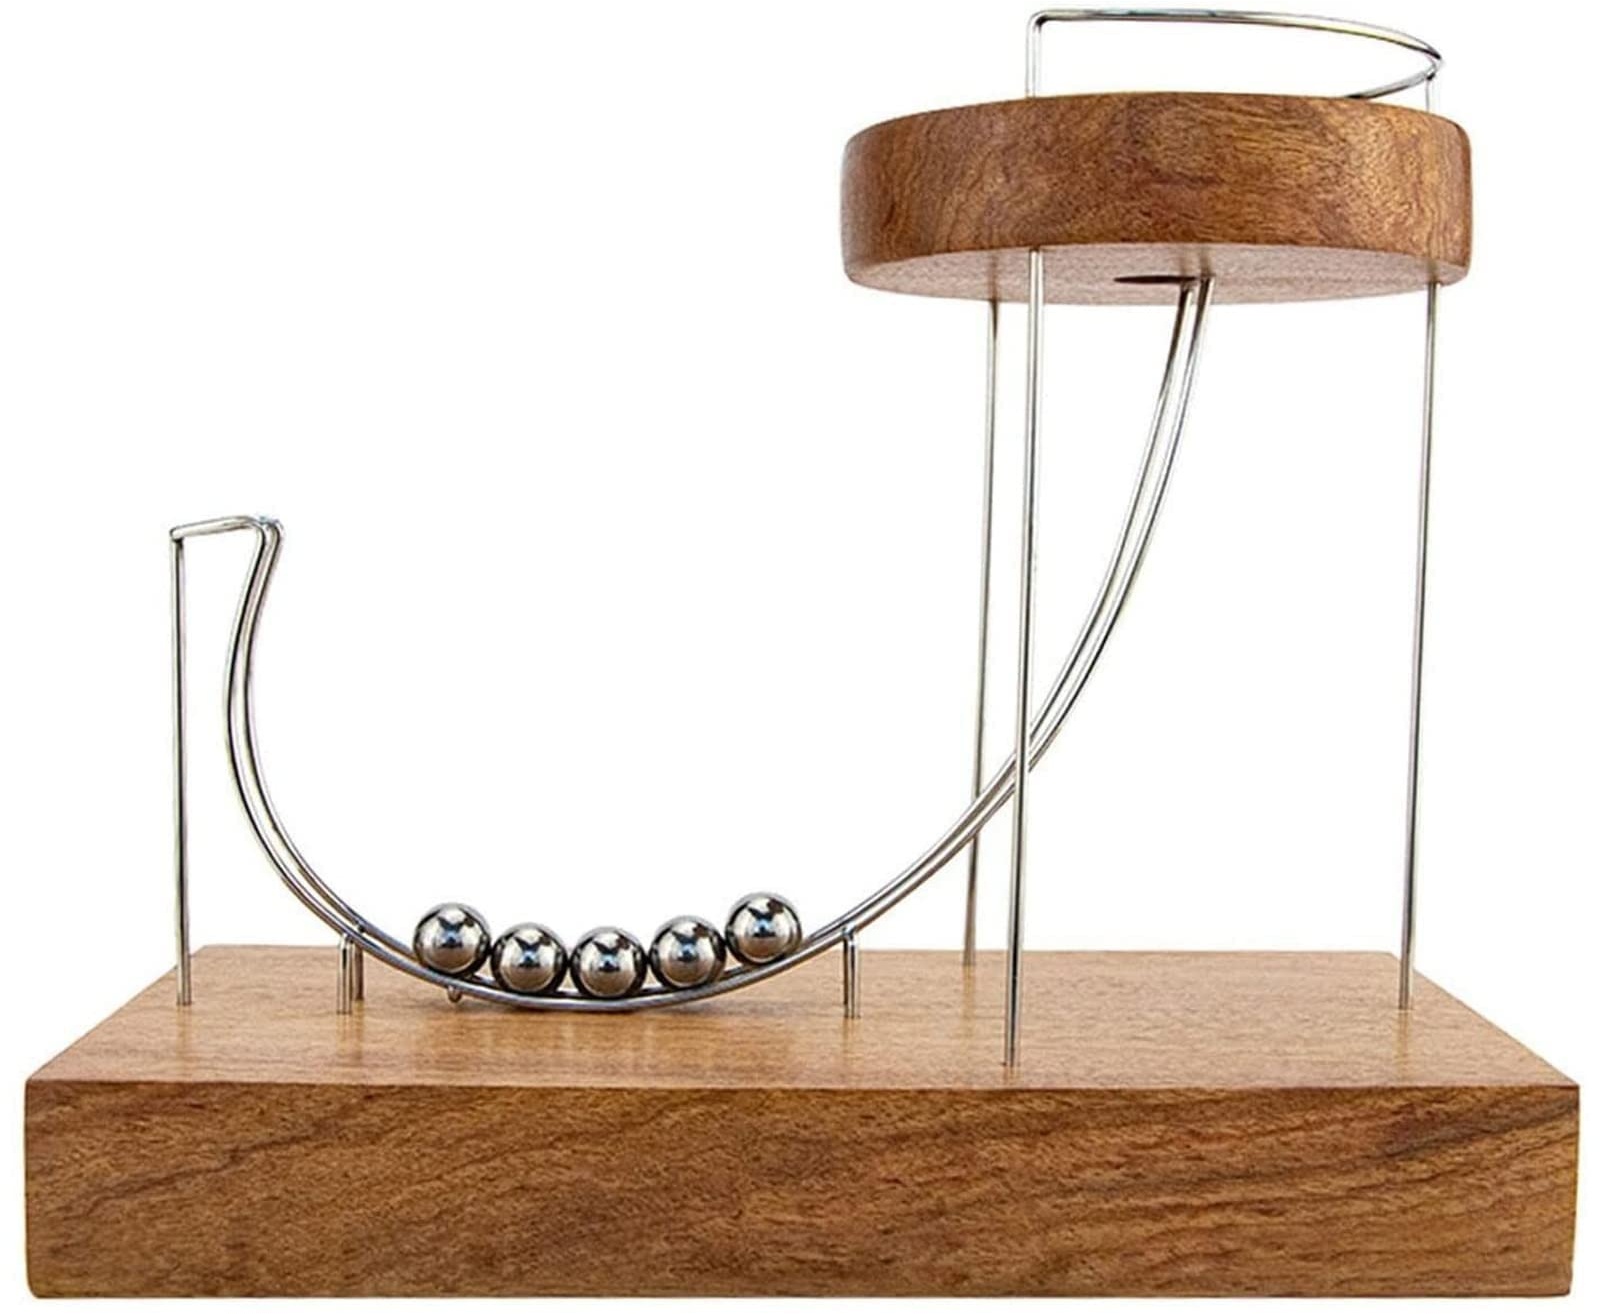 SKaTR Kinetische Kunst. Perpetuum Mobile. Rolling Ball Perpetual Marble Machine, Science Physics Gadget, Holzskulptur Office Home Desk Ornament-Holz, Einheitsgröße,Dynamic